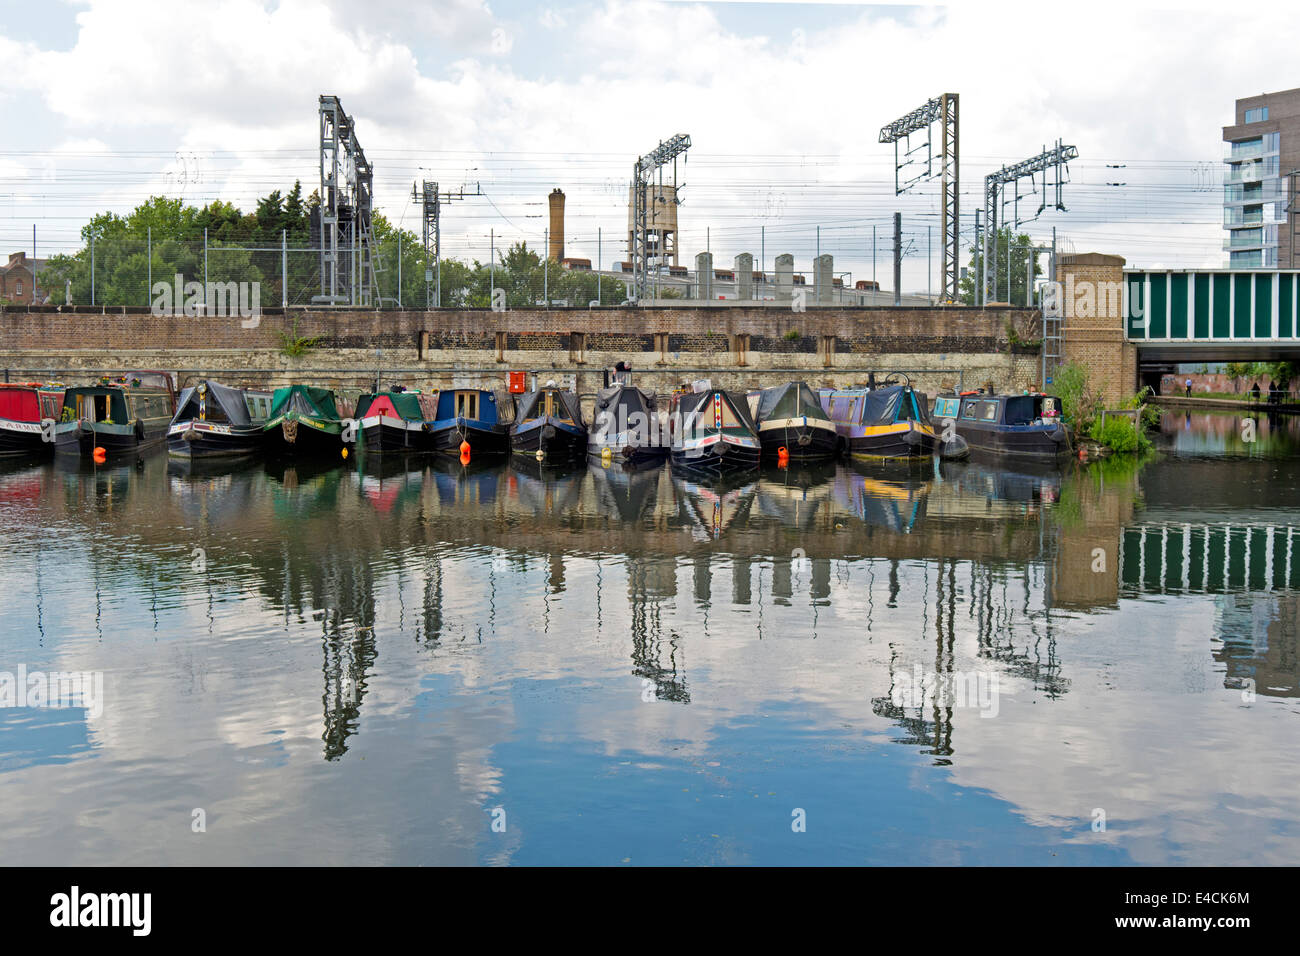 canal boats moored alongside the train line in King's Cross, London. Stock Photo